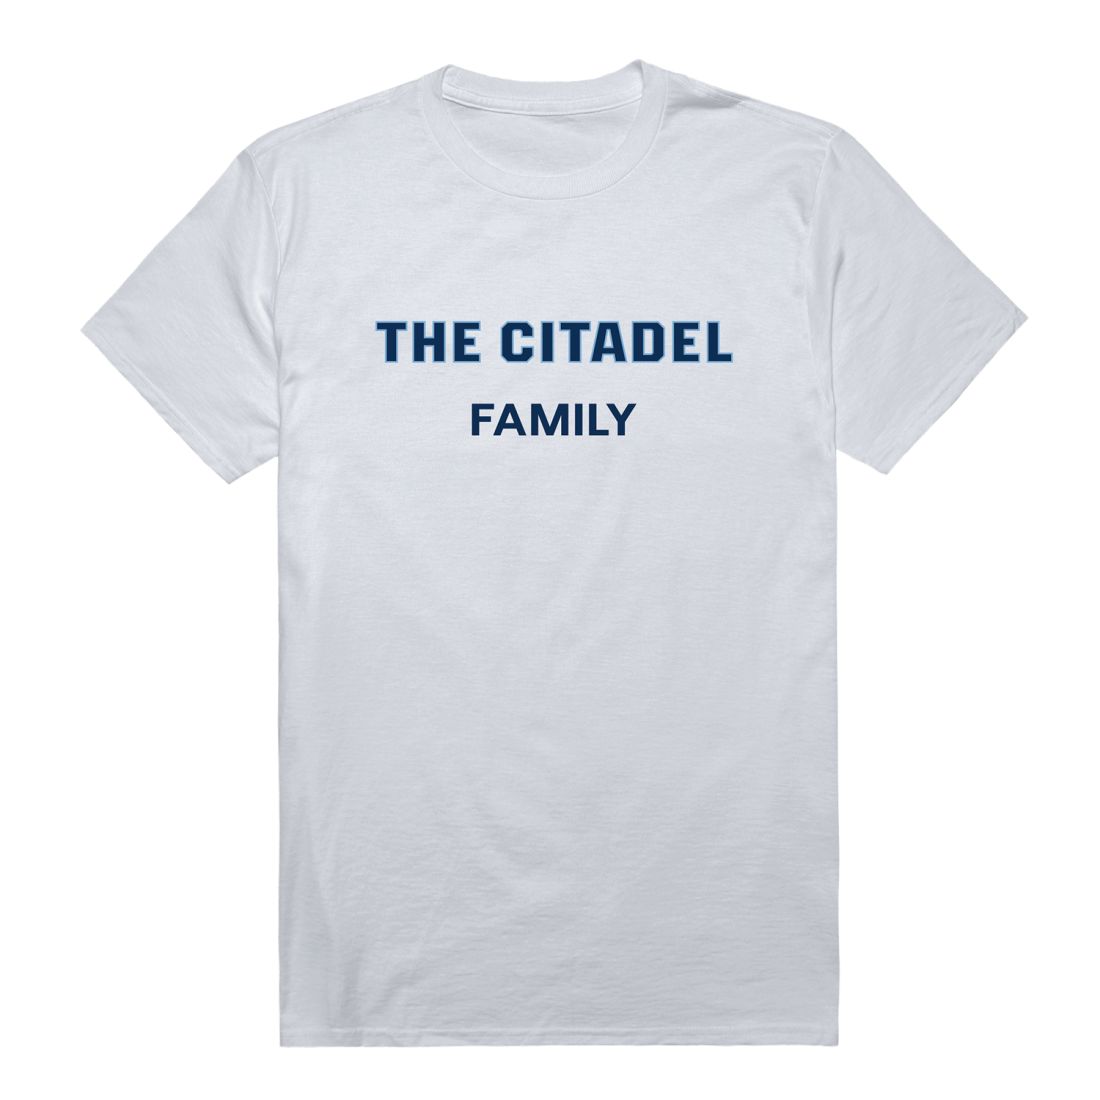 The Citadel Bulldogs Family T-Shirt